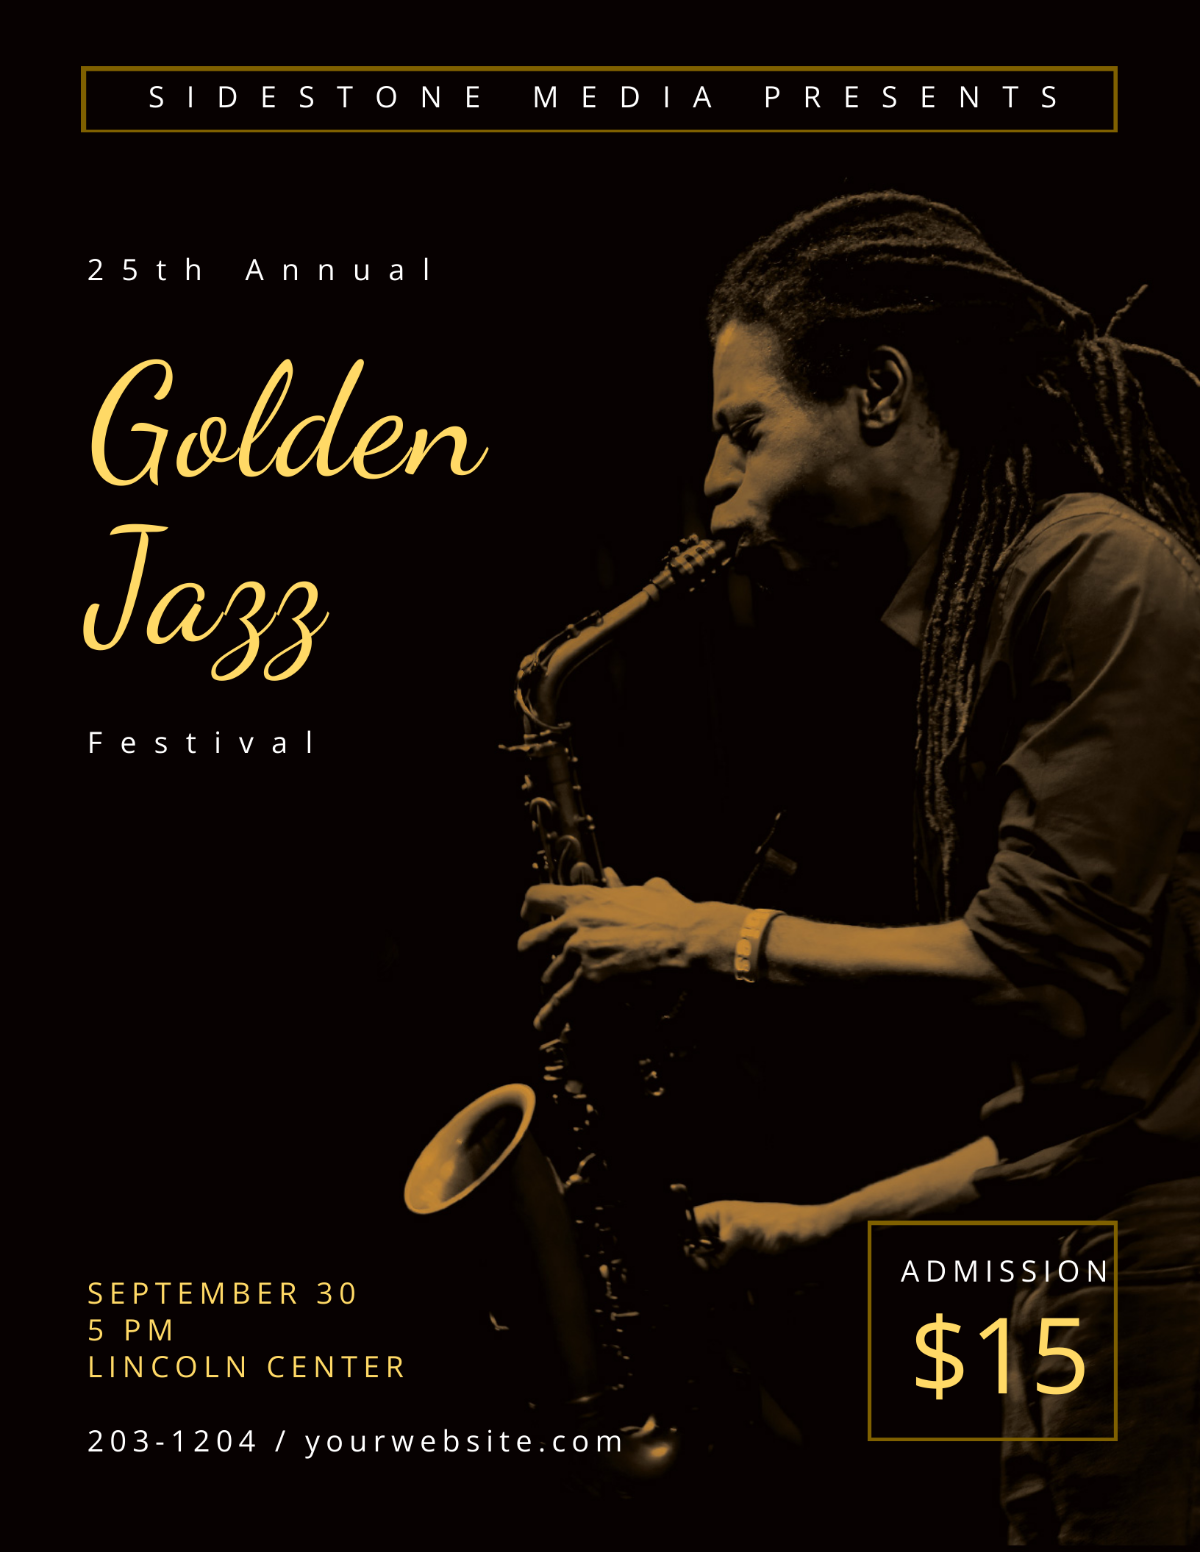 Golden Jazz Flyer